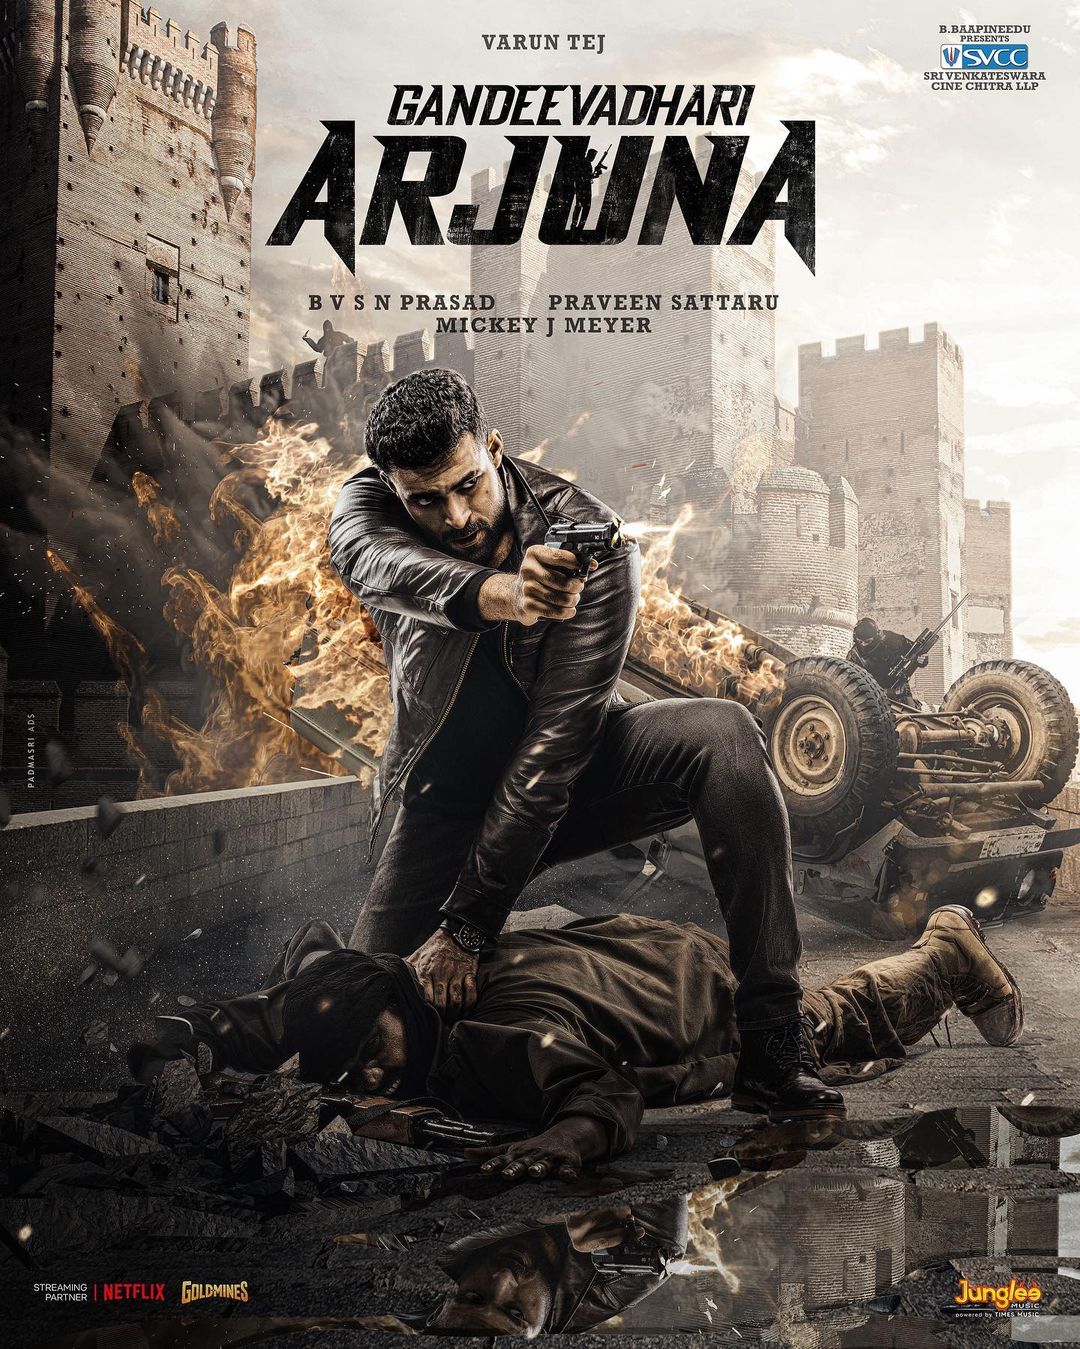 Gandeevadhari Arjuna Movie Poster